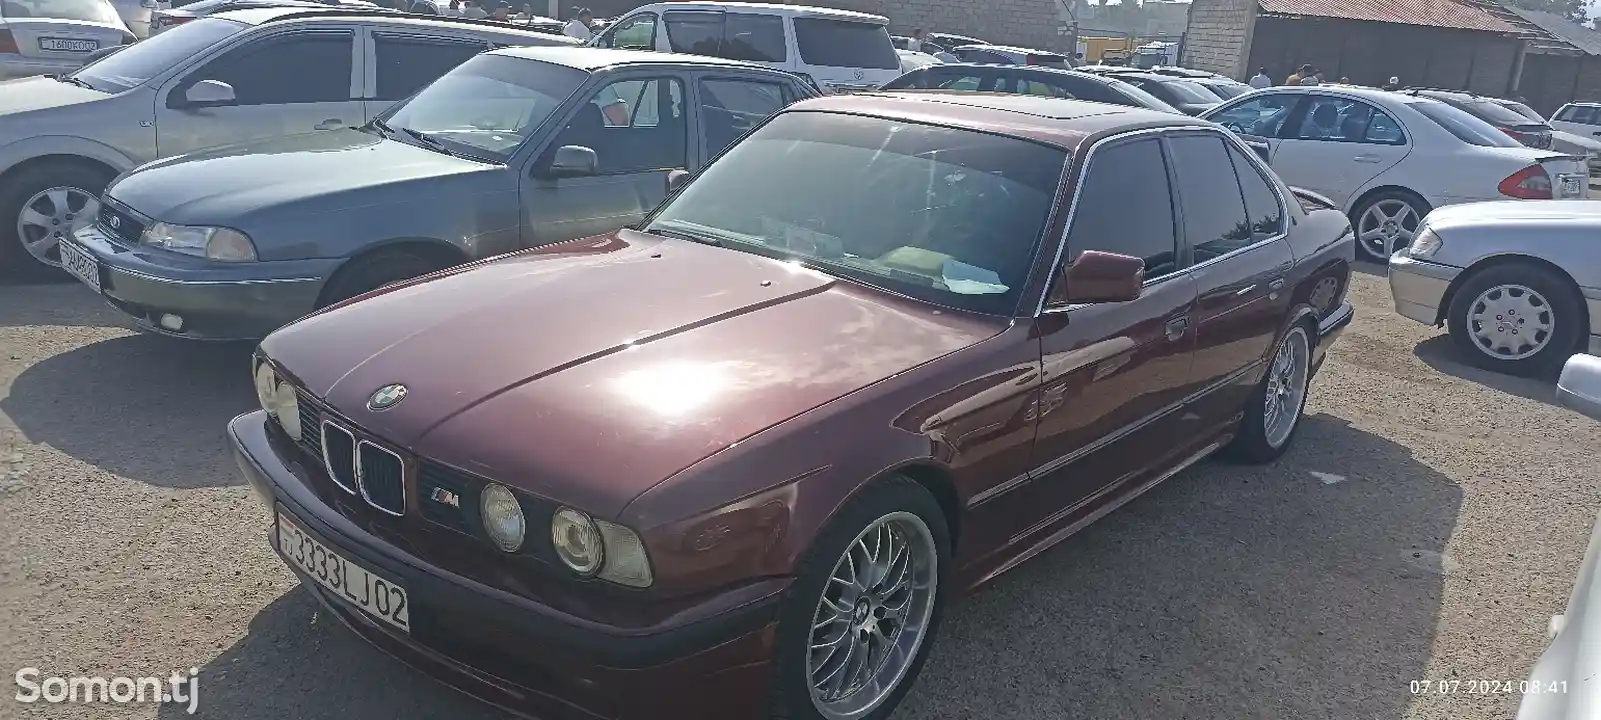 BMW 5 series, 1994-1